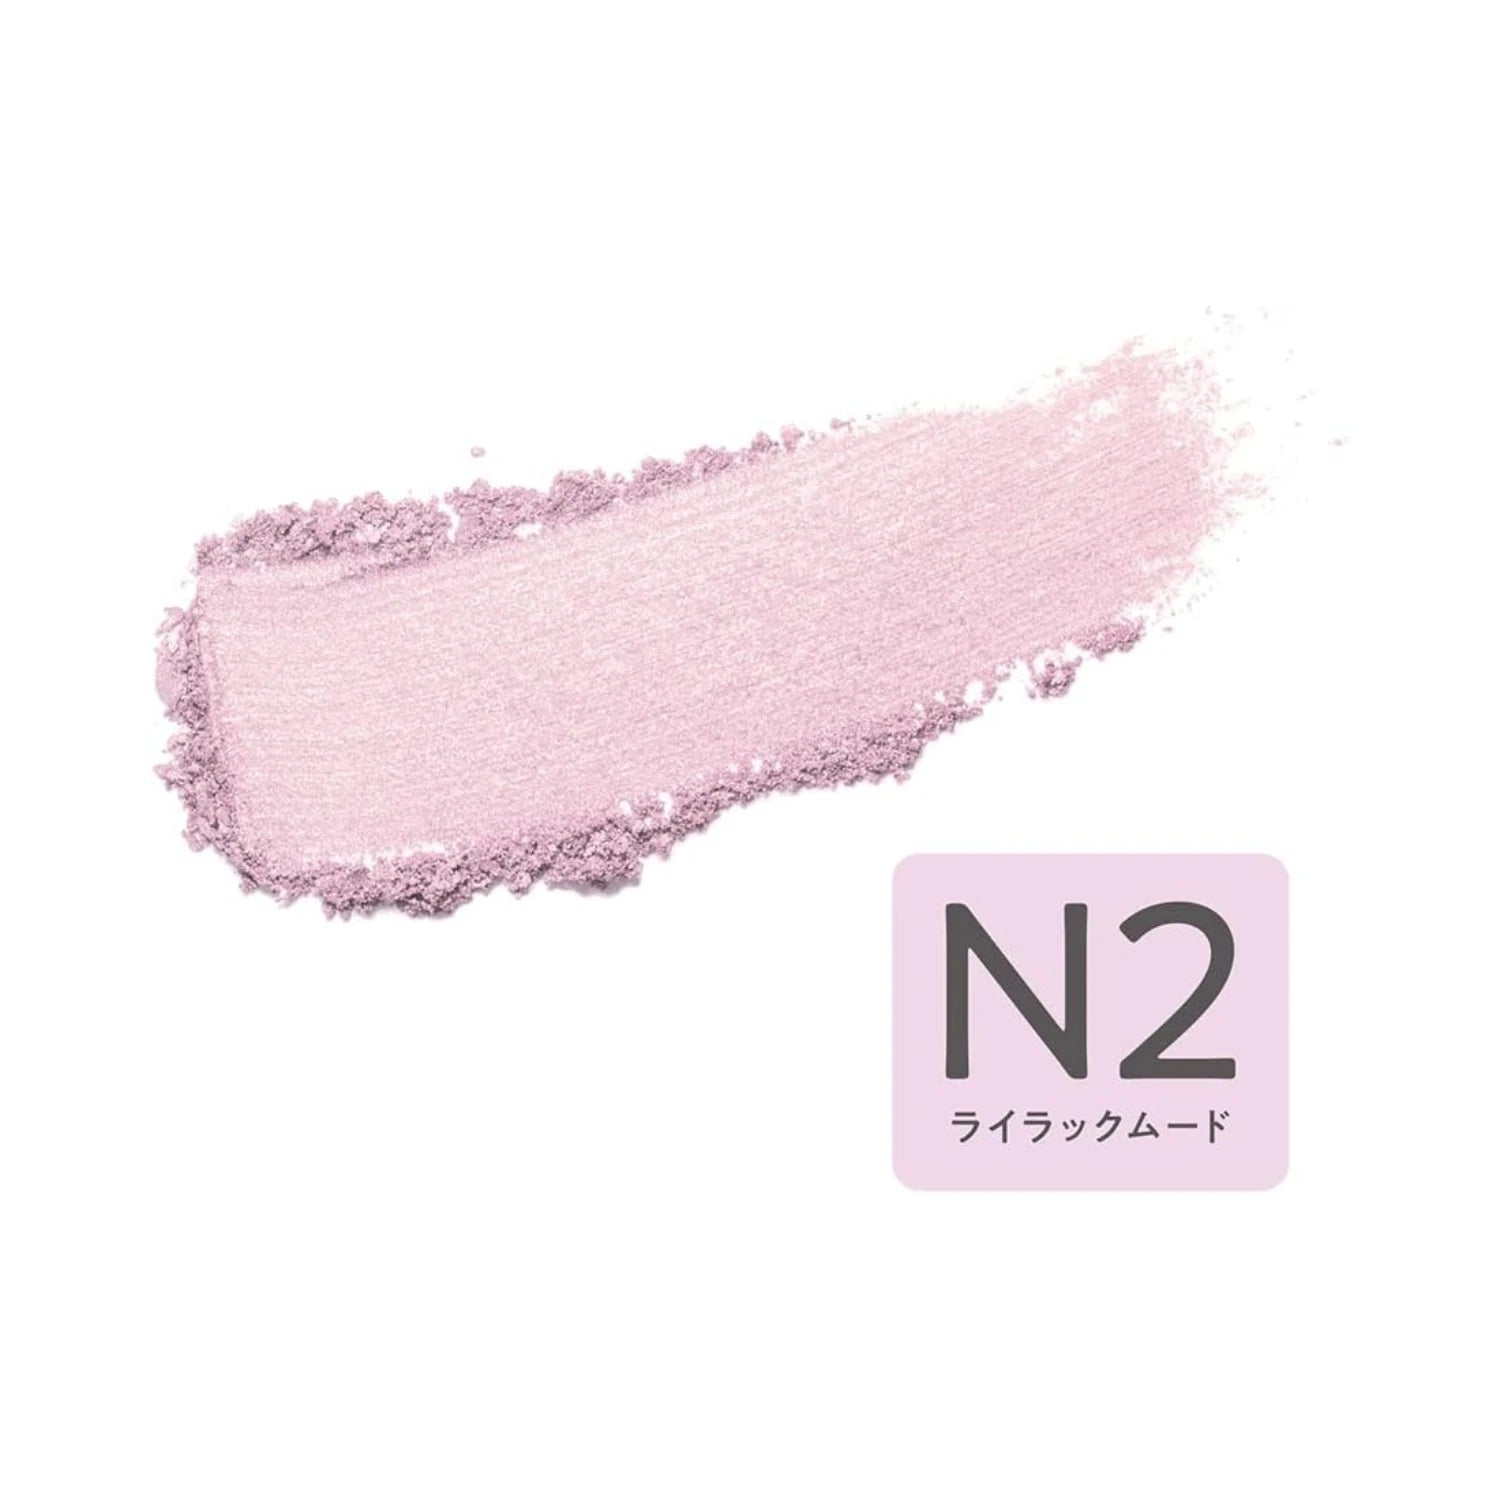 Cezanne Nuancer Pearl Glow Nuance Highlighter 2.4g - Buy Me Japan